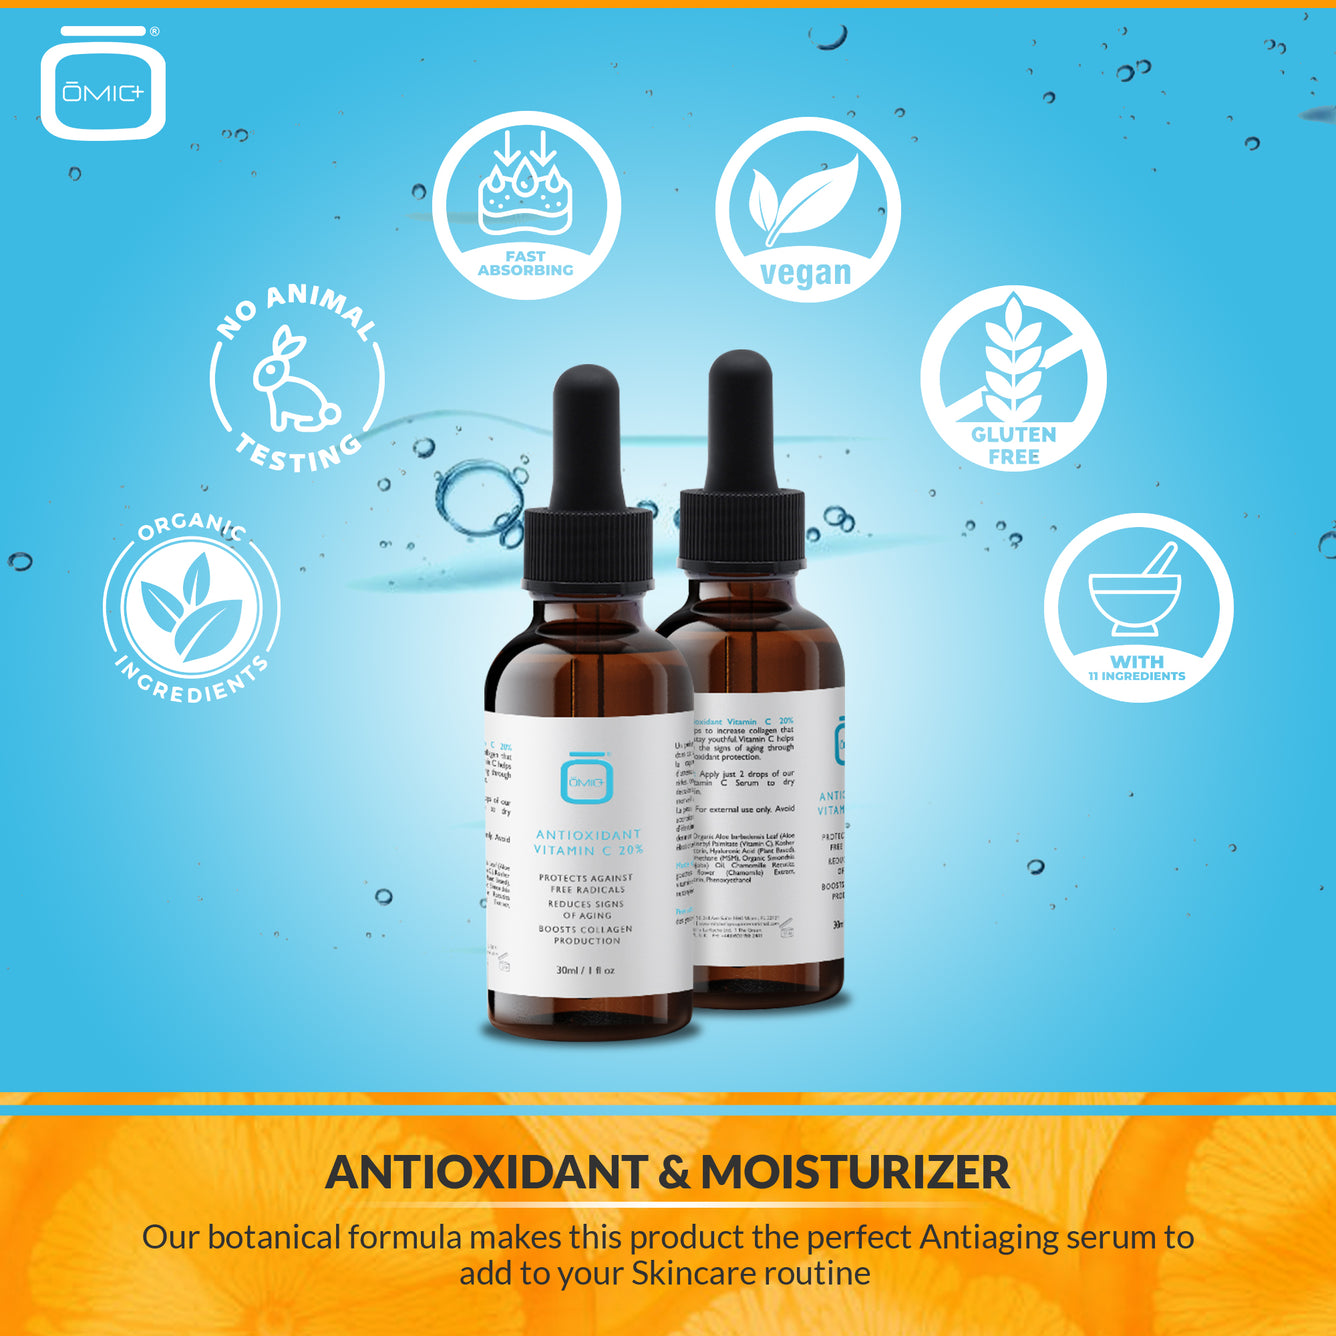 US Omic+ Antioxidant Vit C 30ml